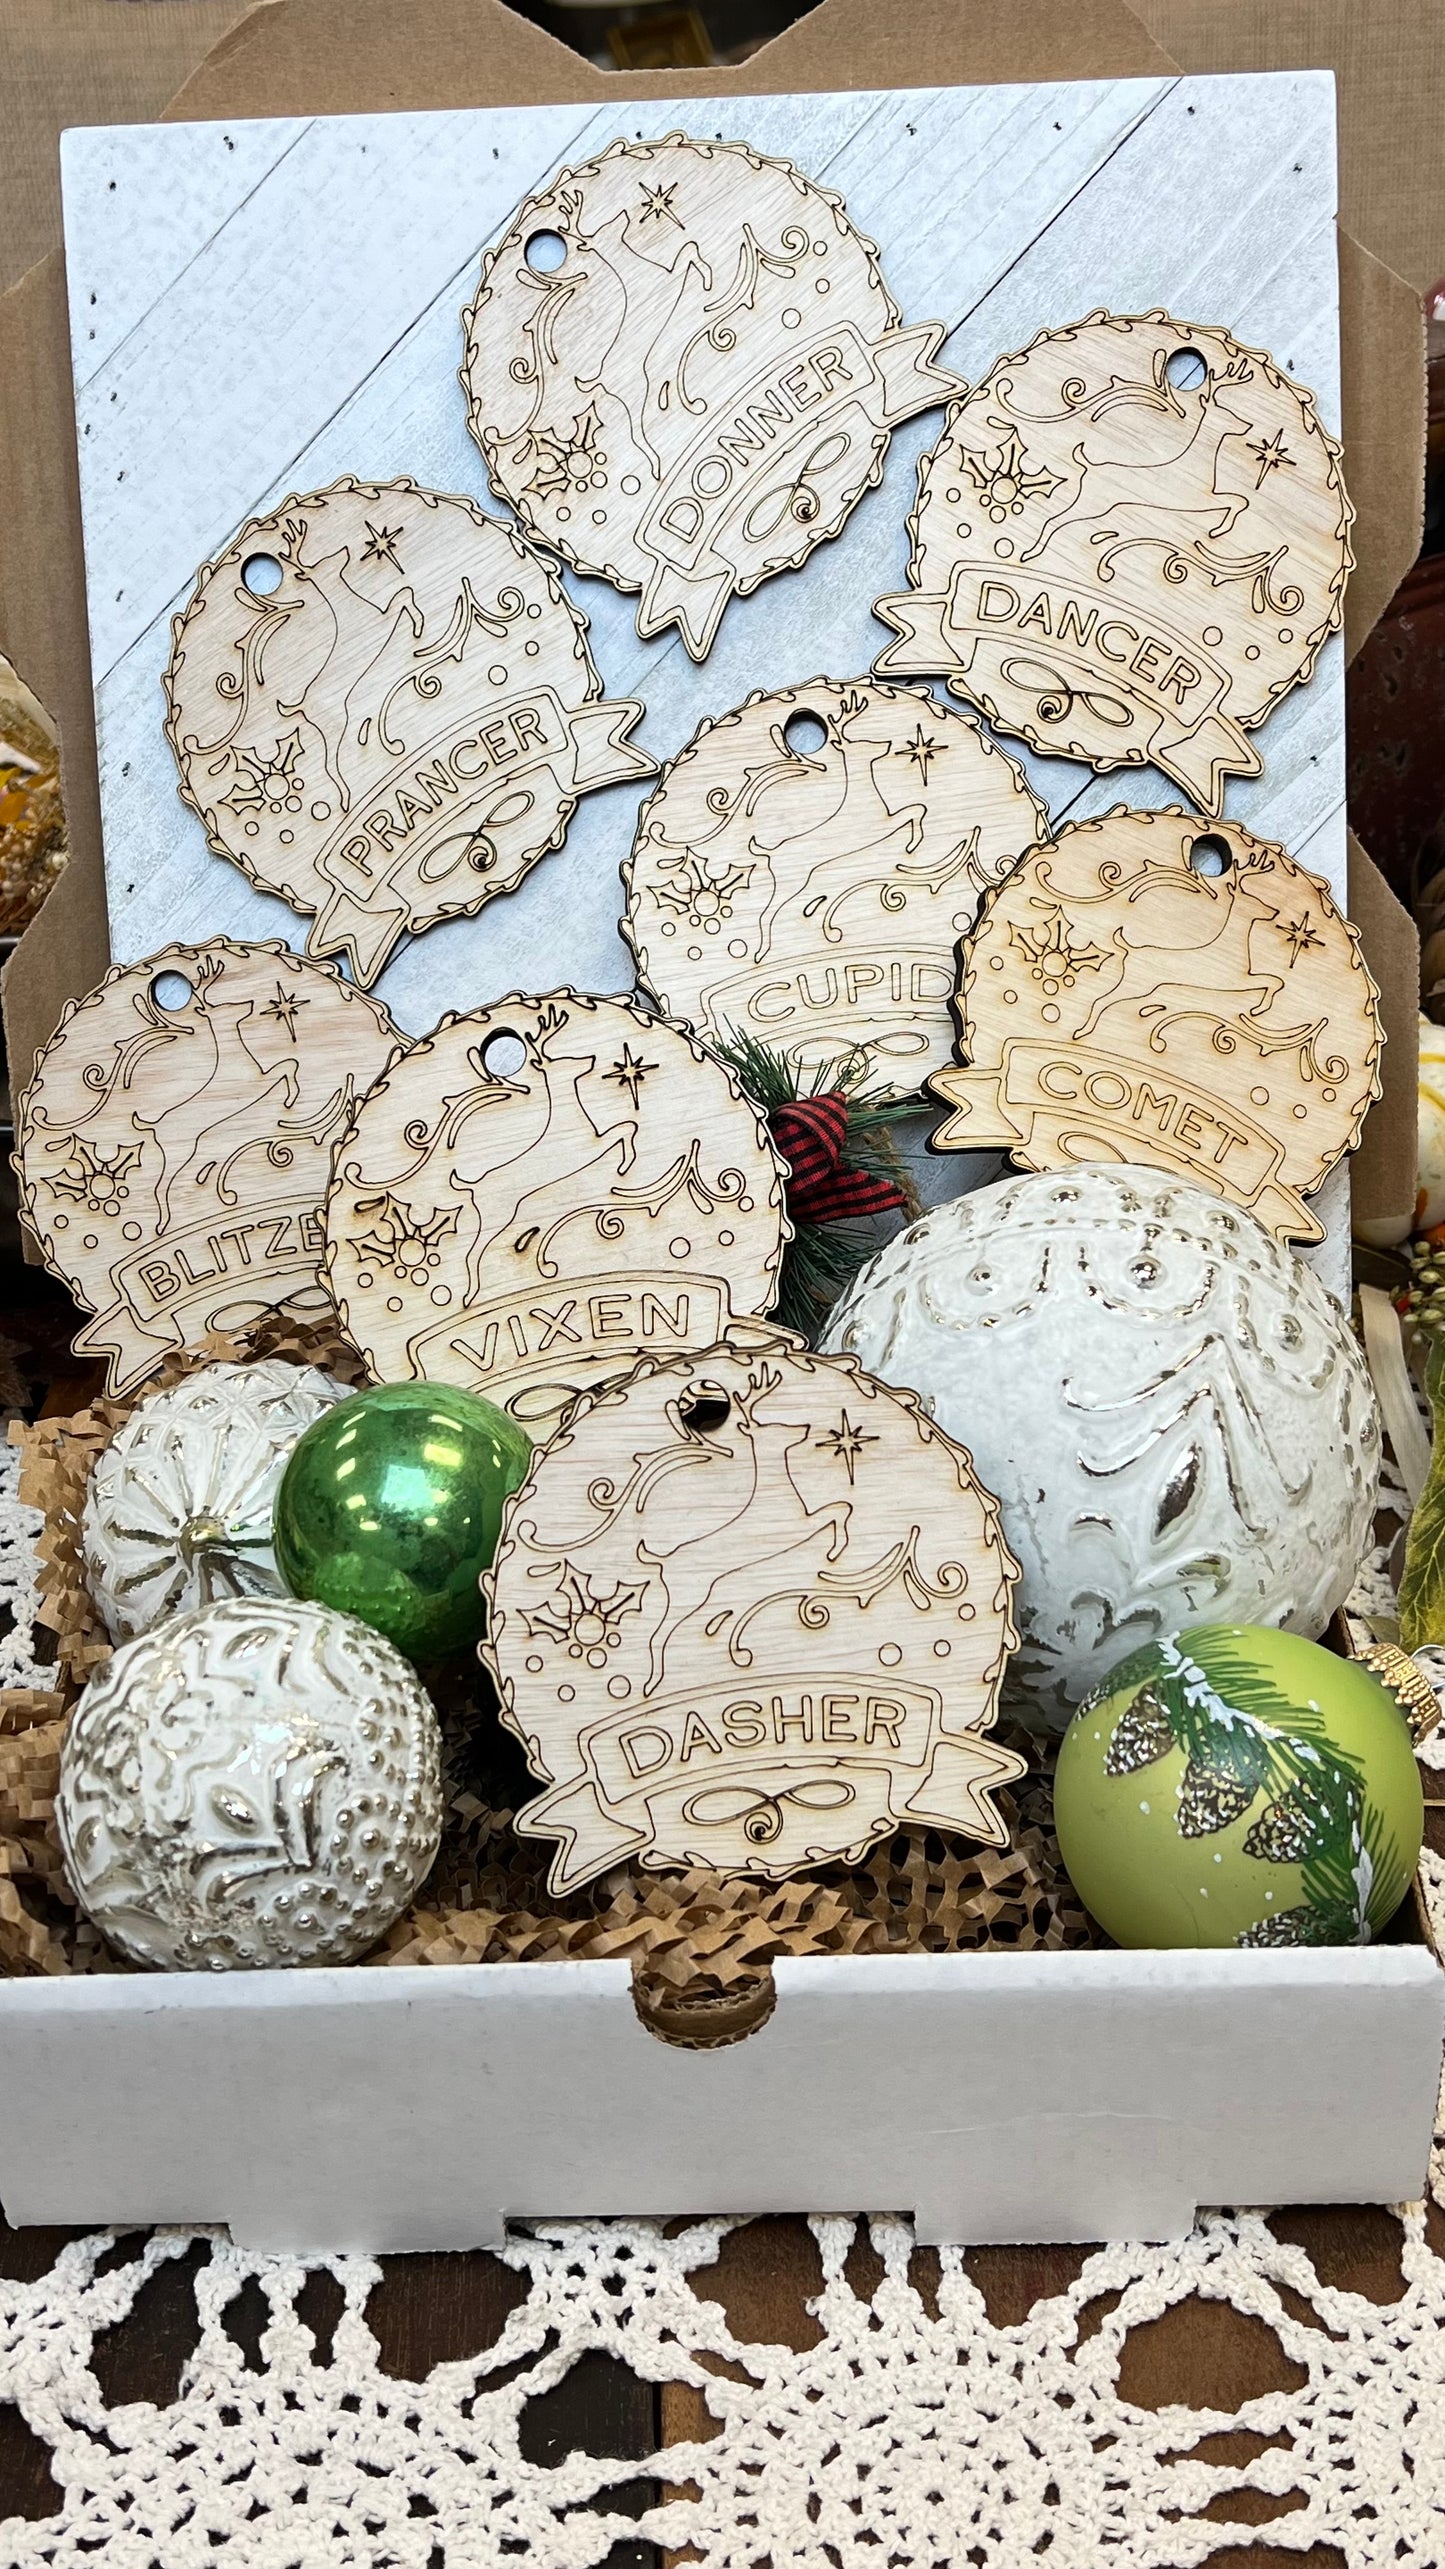 Santa's Reindeer ornaments. Custom made 1/4-inch plywood laser cut ornaments. Comet, Cupid, Donner, Blitzen, Dasher, Dancer, Prancer, and Vixen